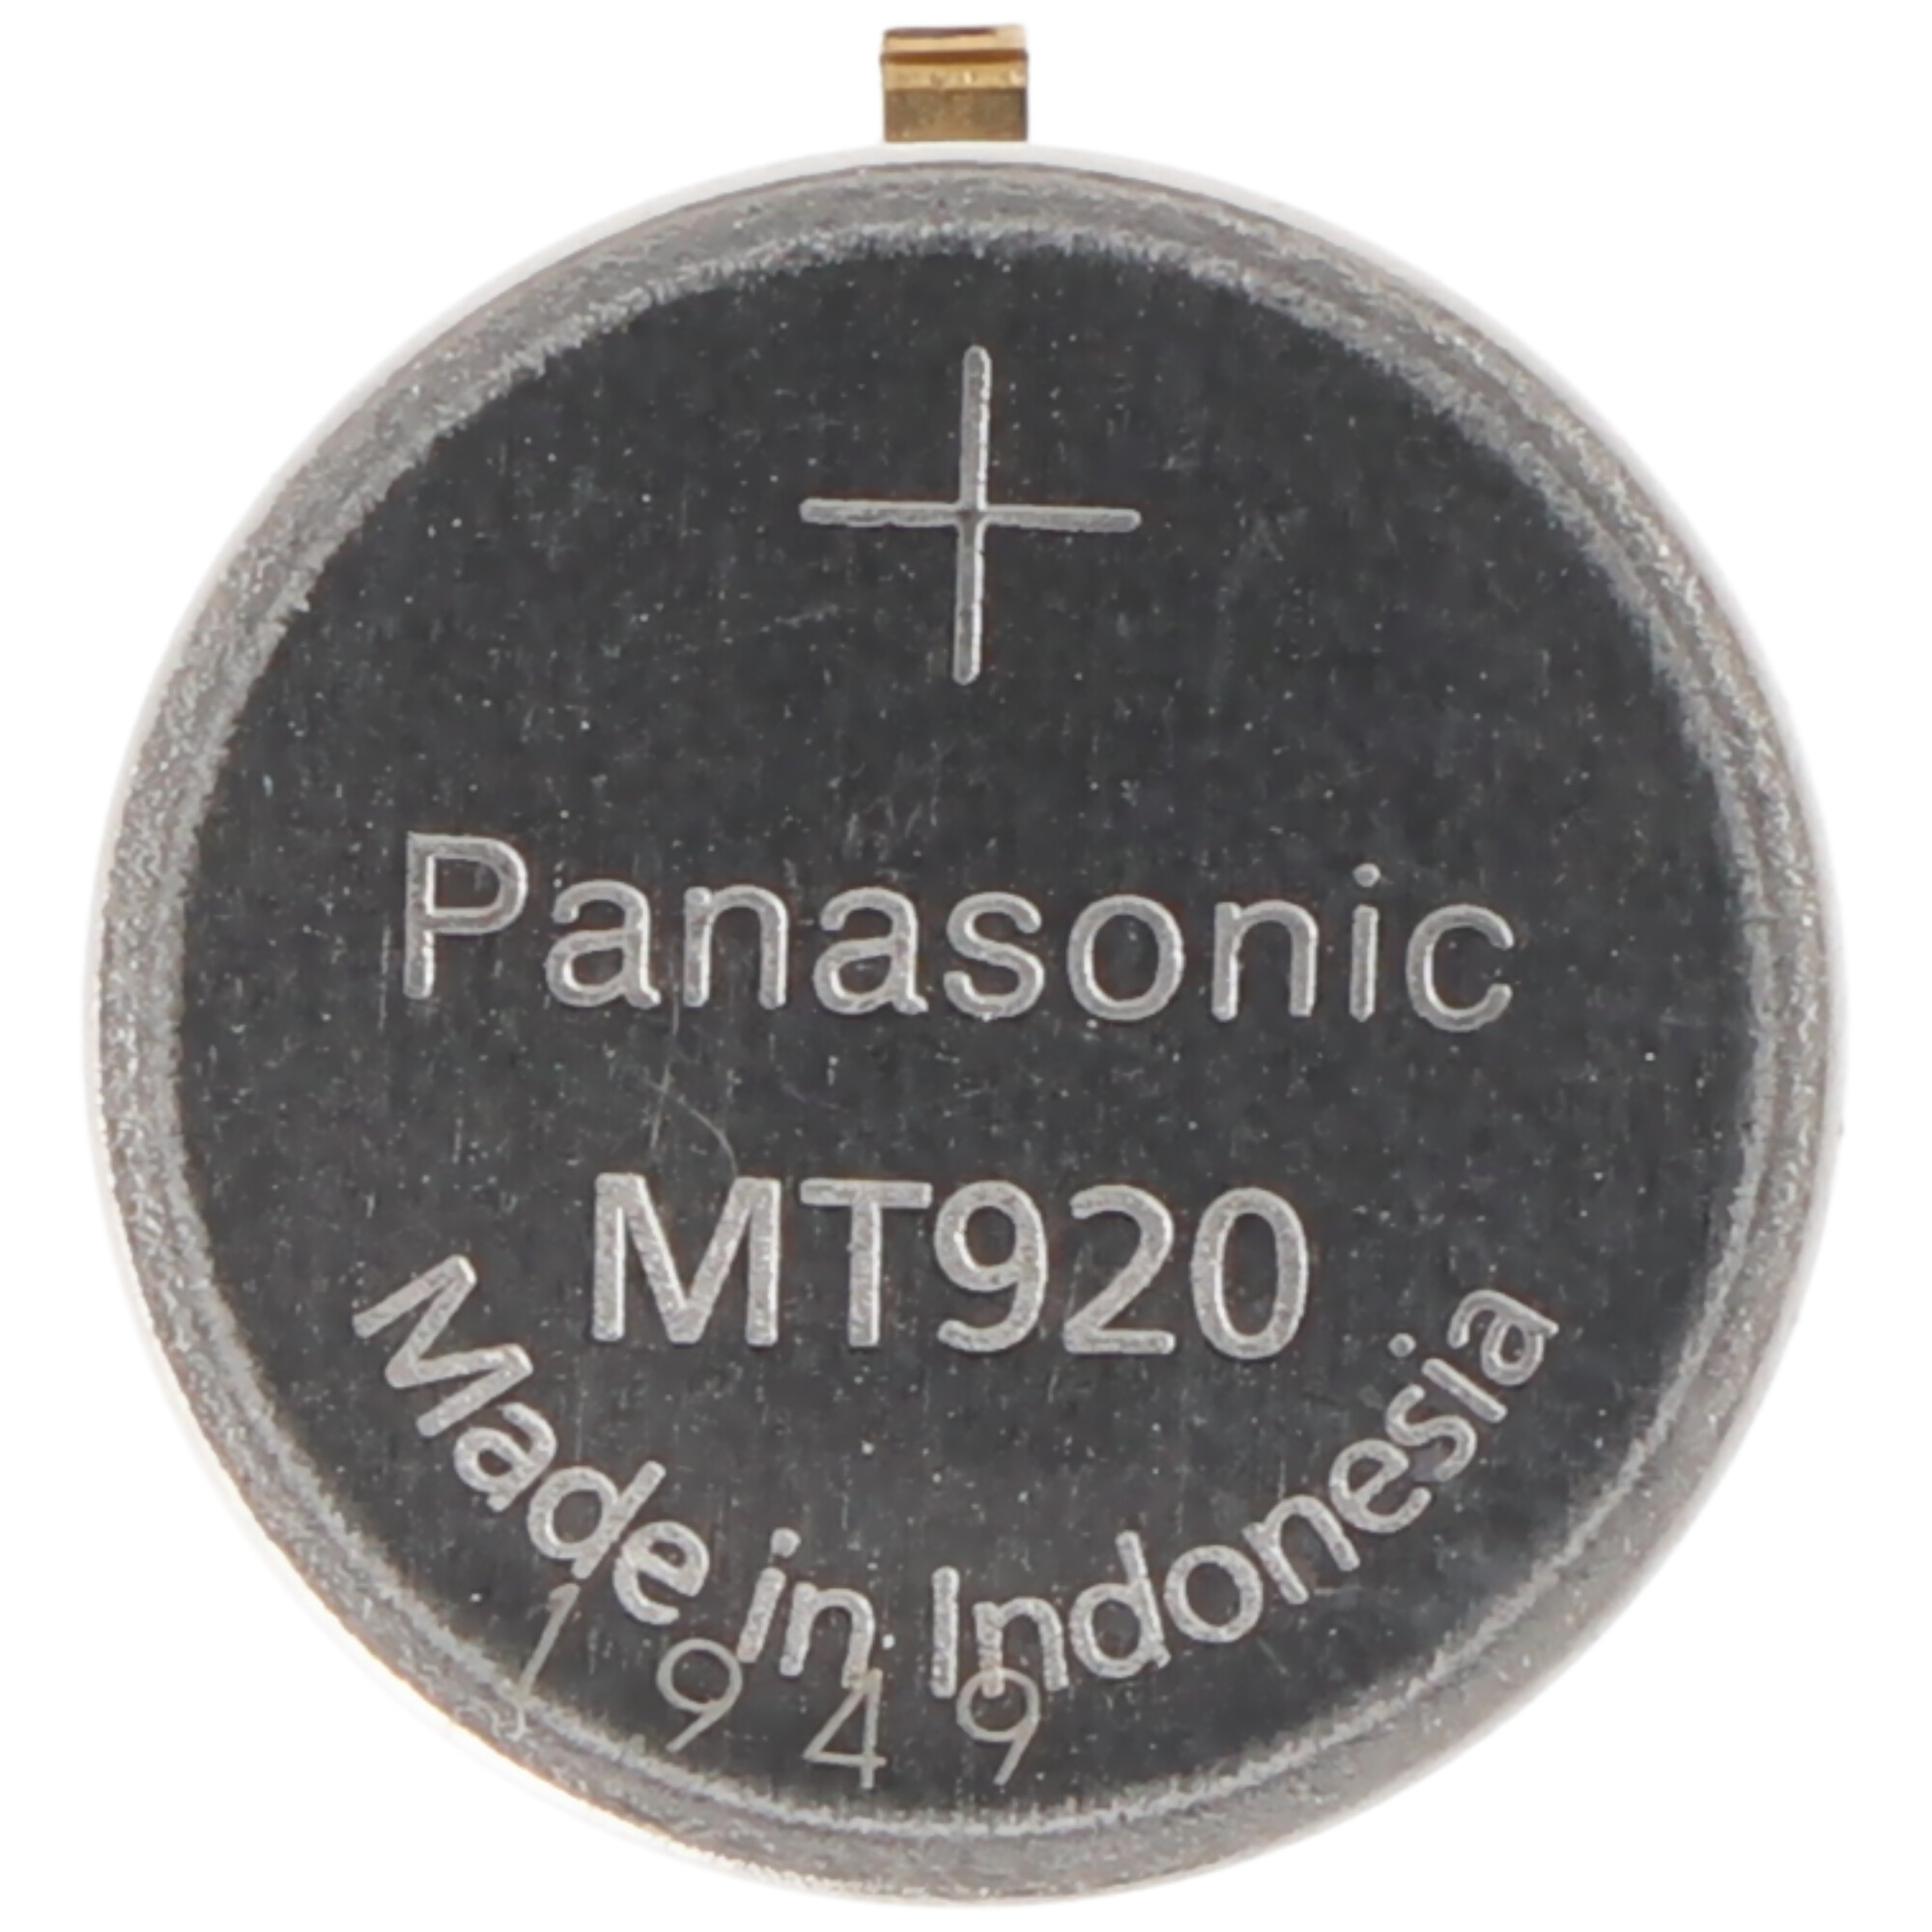 Panasonic Citizen Kondensator Akku 295-40, 295-56, 295-5600, MT920 ideal passend für Citizen Kaliber E767M, Solar Uhren, mit Lötfahne, 1,5V